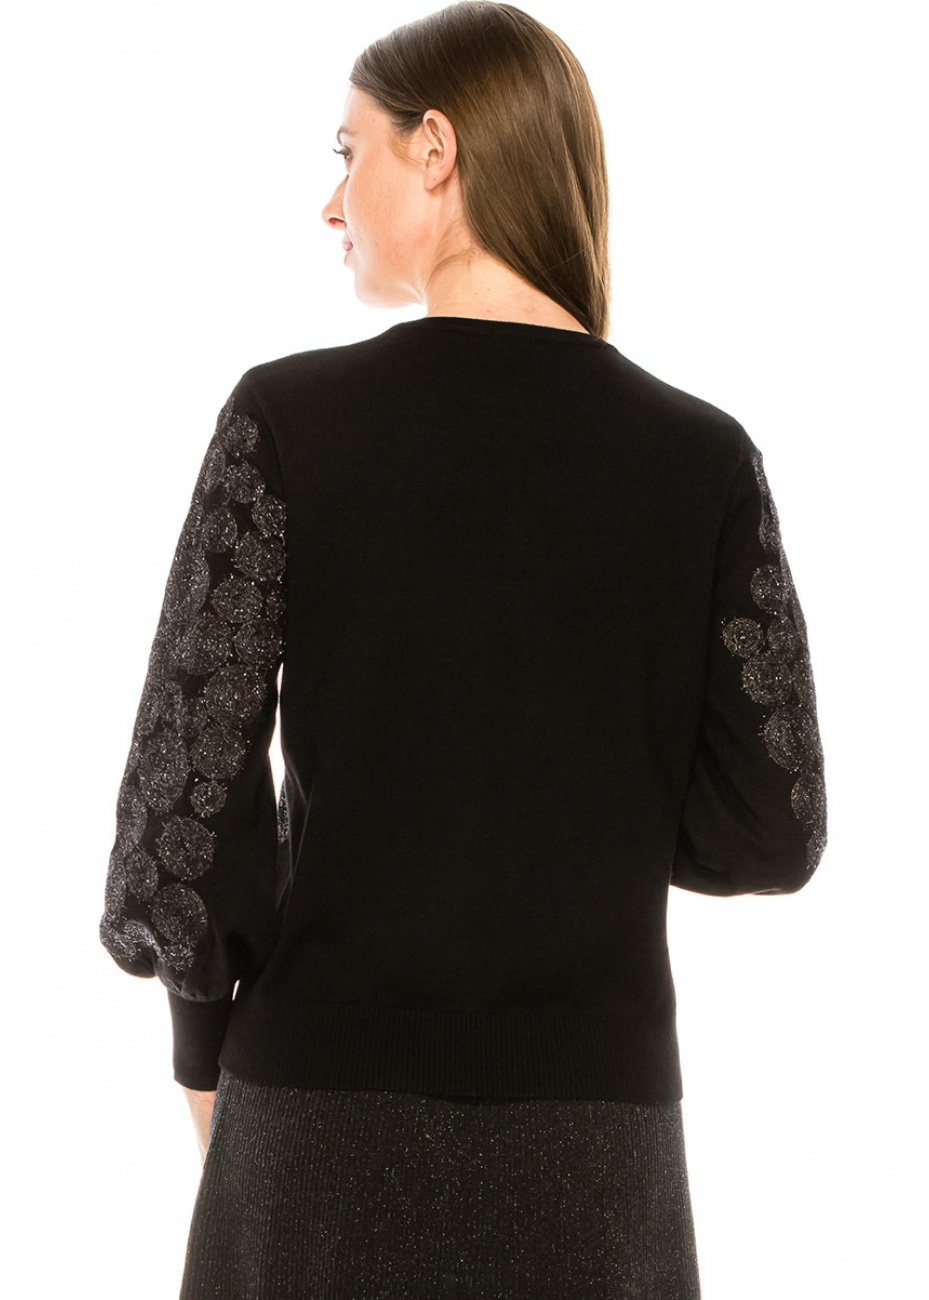 Shiny rings pattern sweater in black